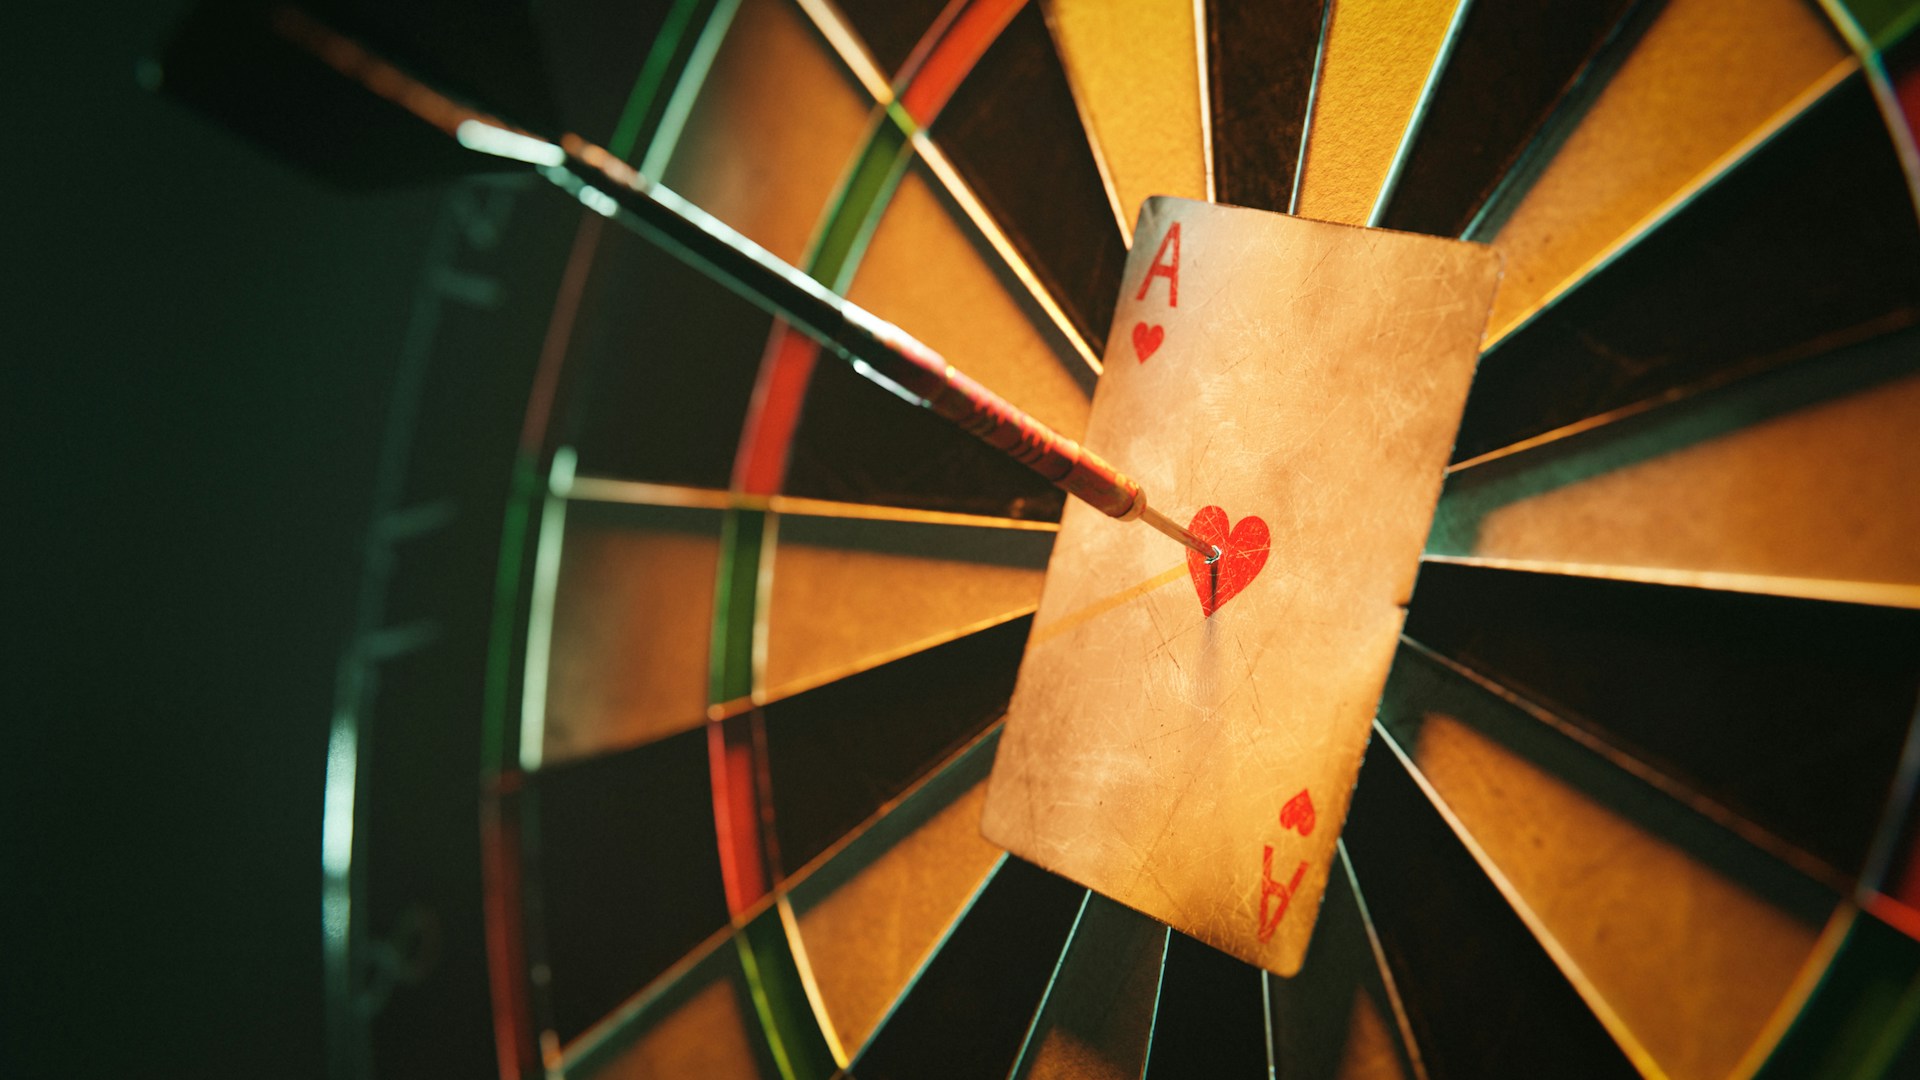 A darts board with an Ace of Hearts card on the bullseye